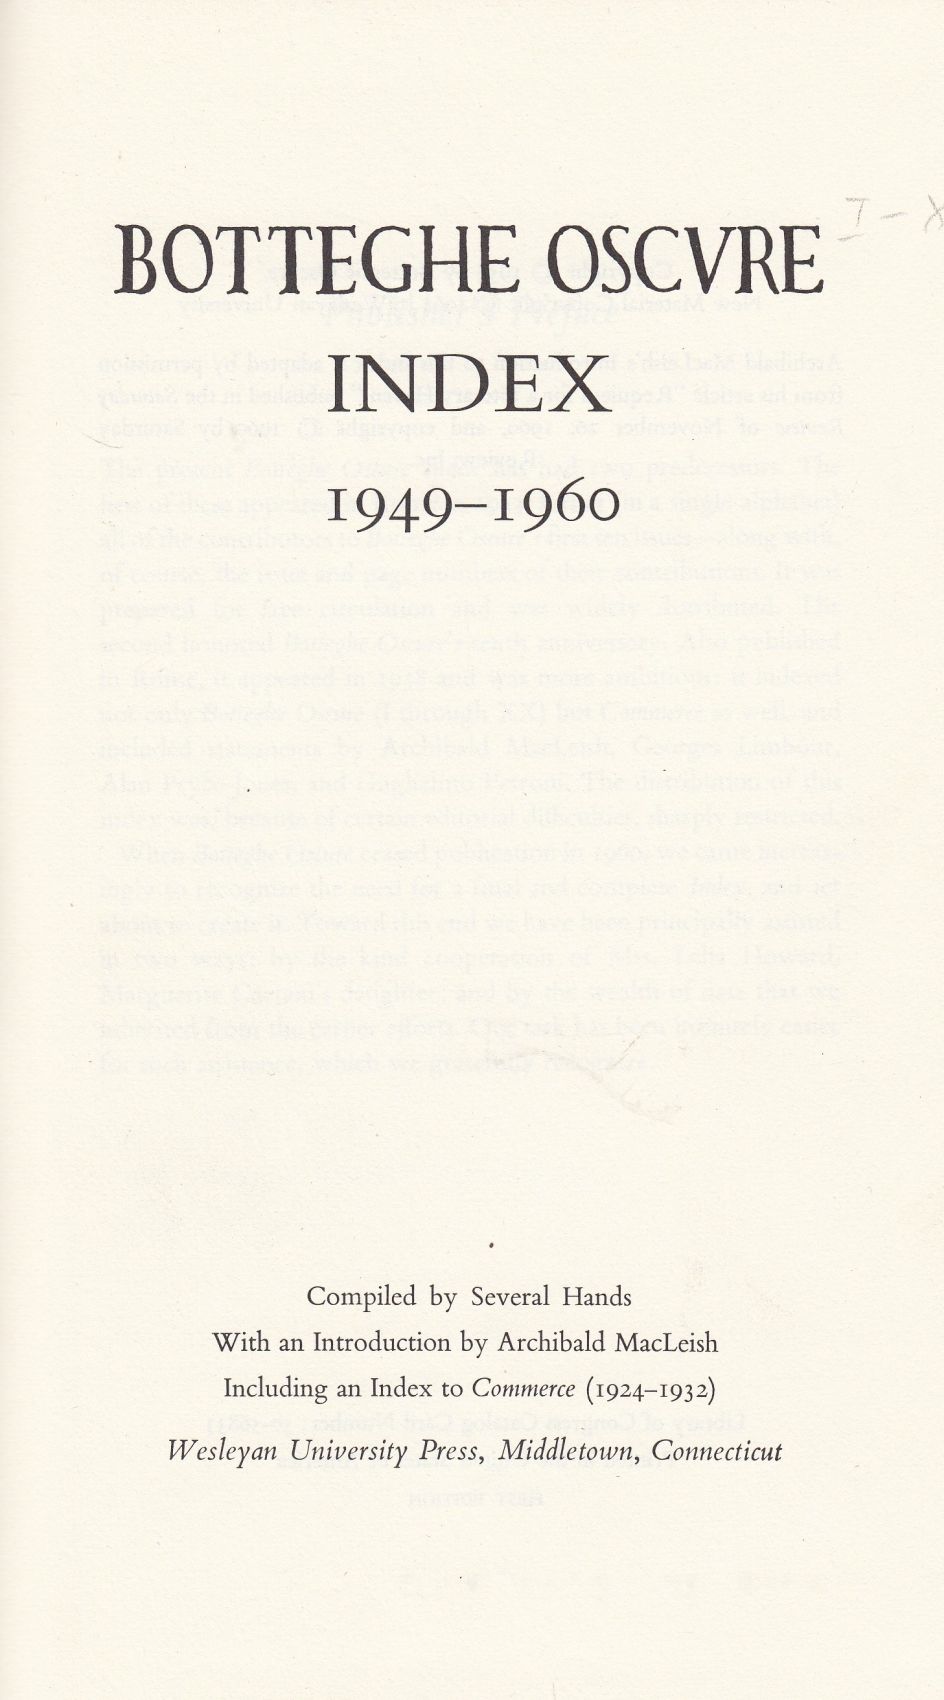 Botteghe Oscure Index (Connecticut: Wesleyan University Press, 1964)